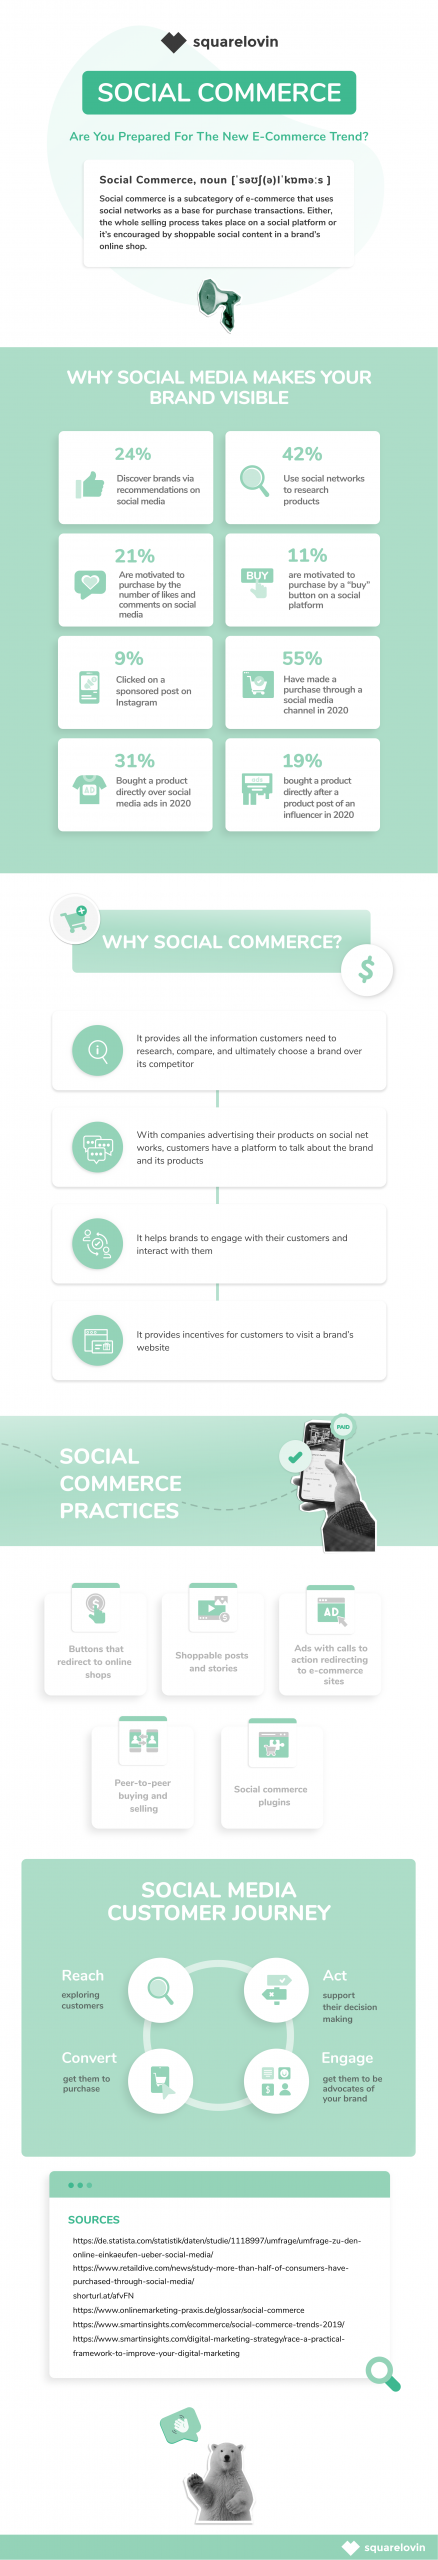 Social Commerce Infographic_mainframe_de